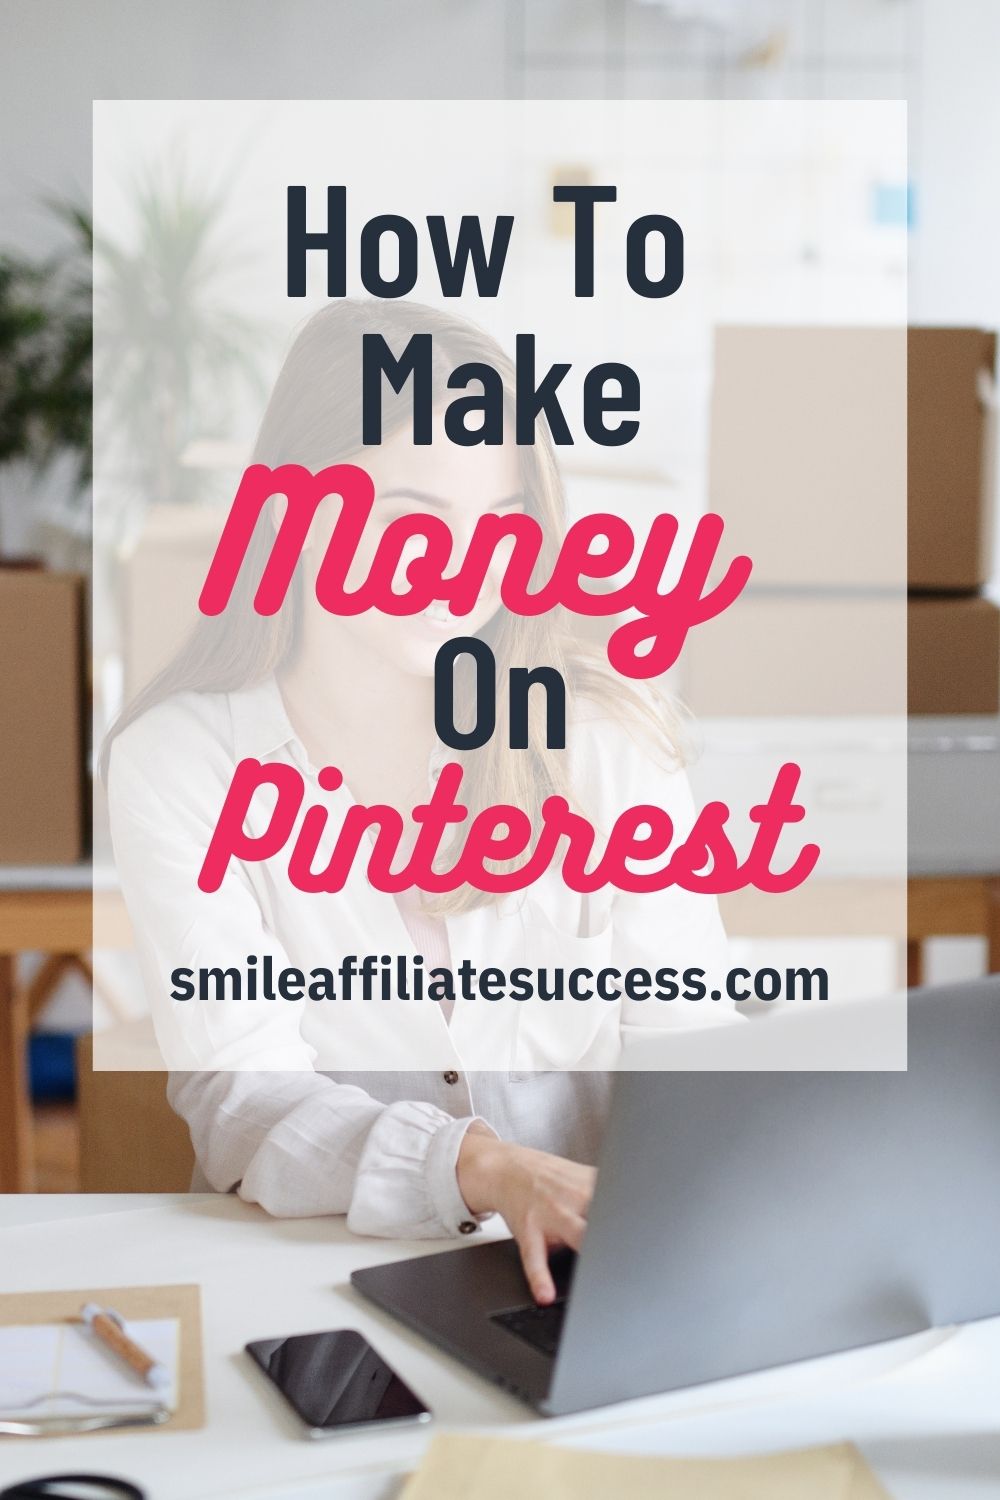 How To Make Money On Pinterest